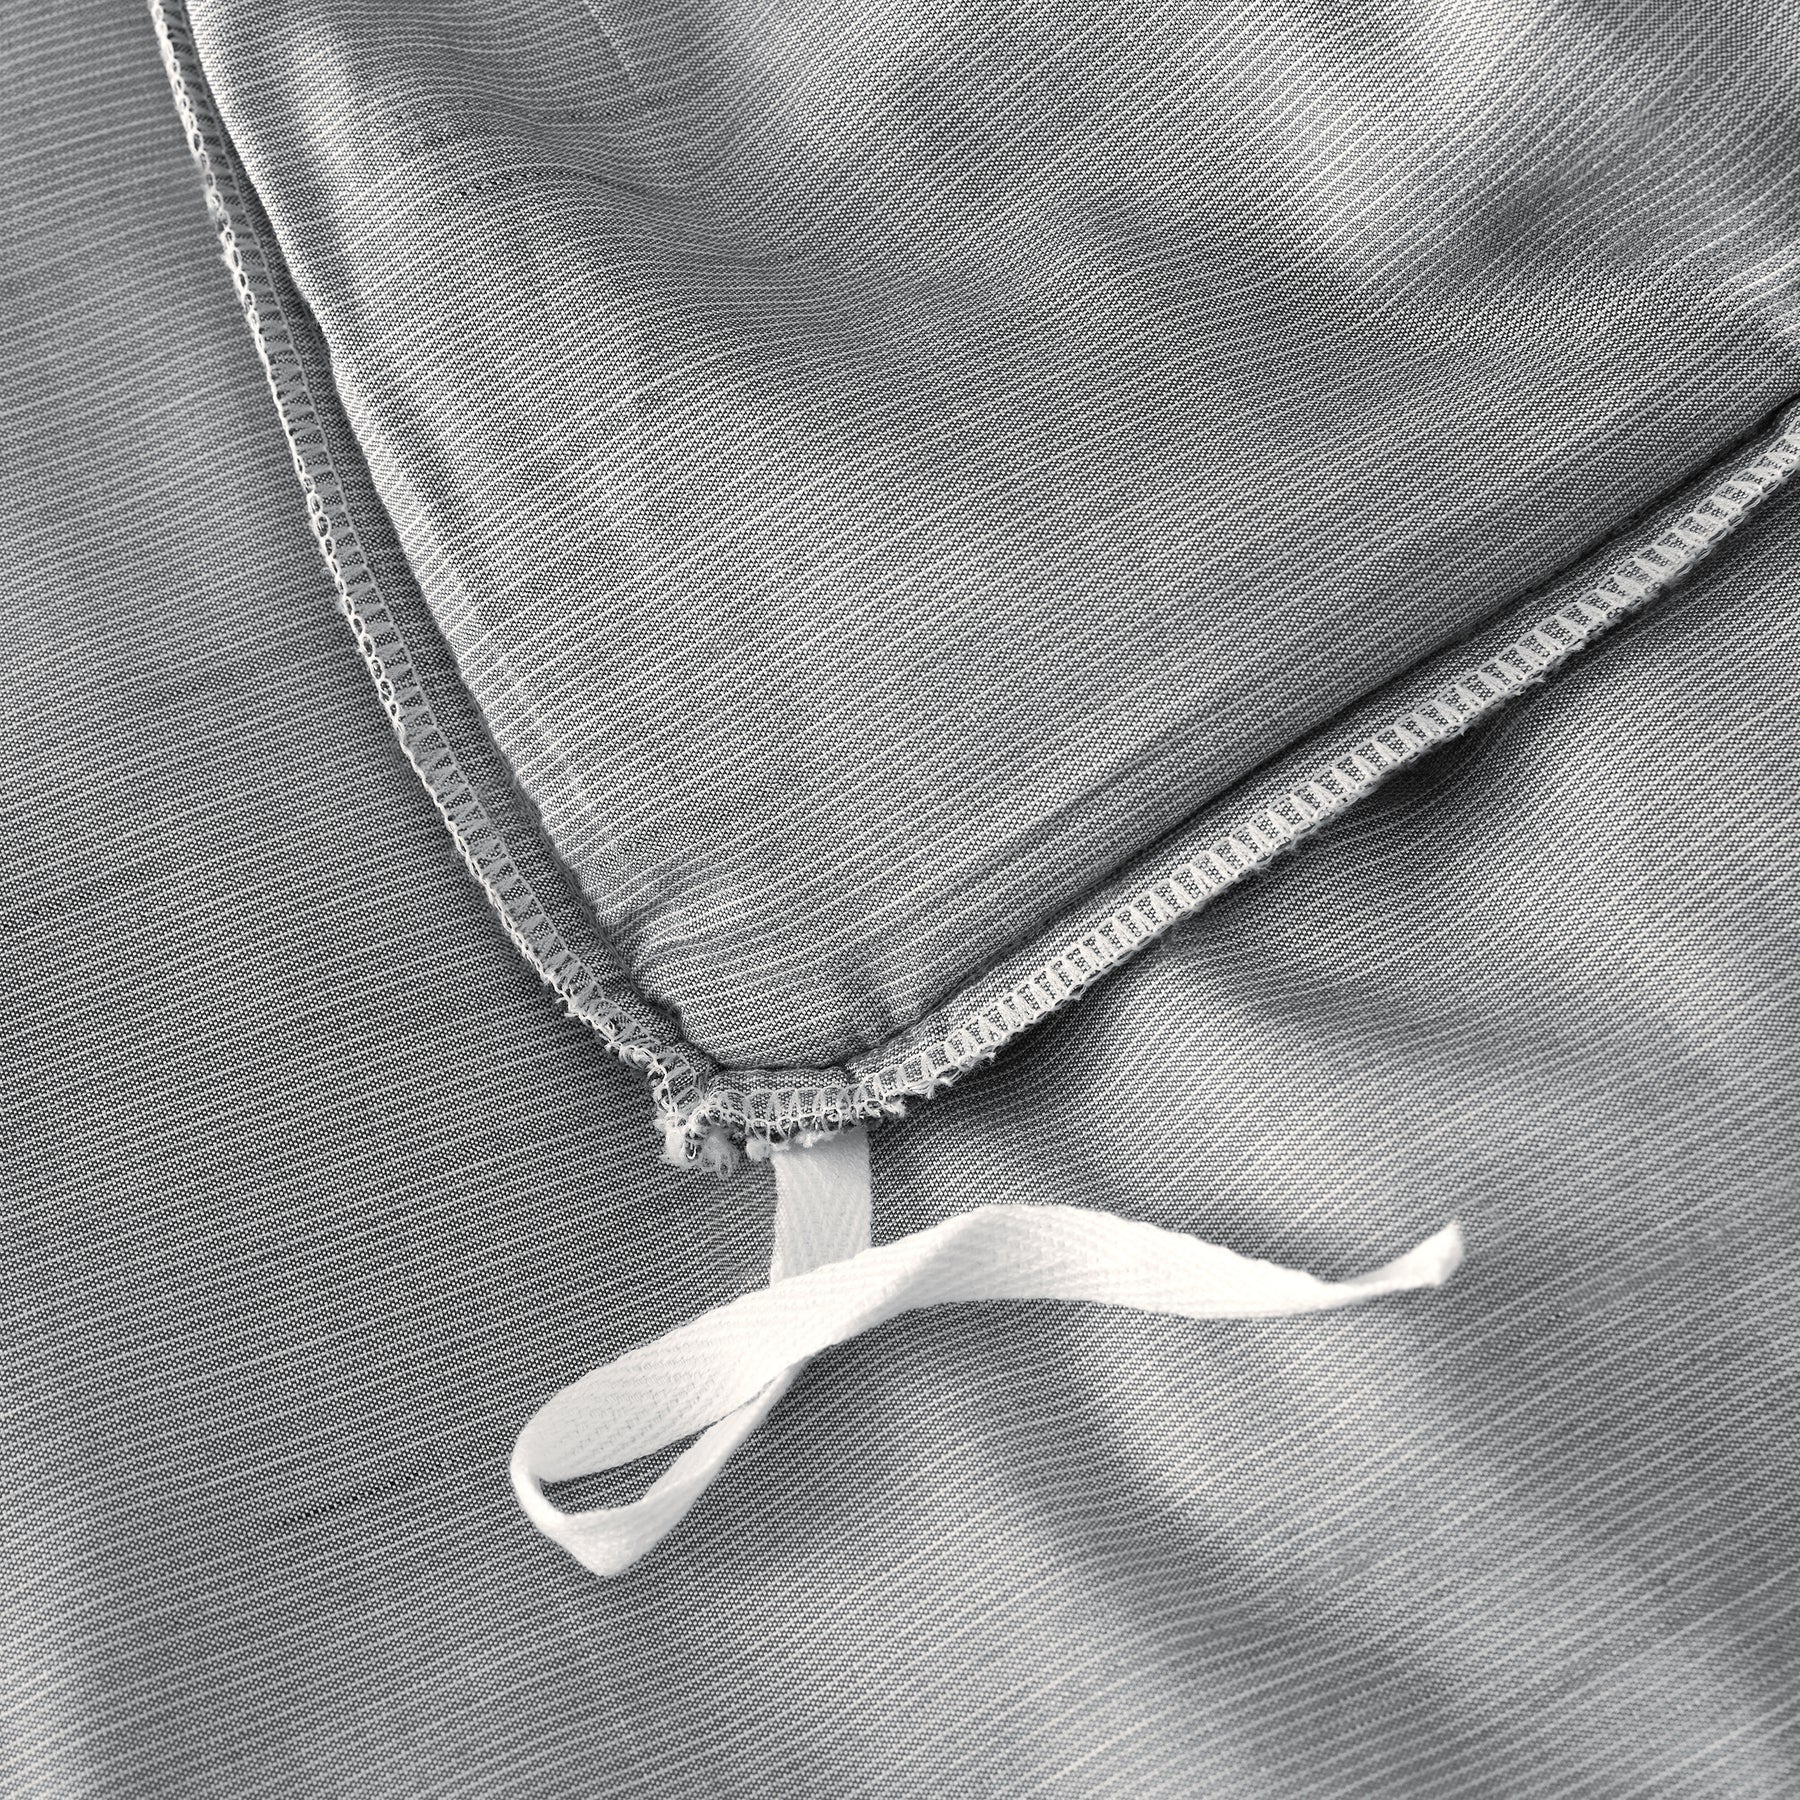 Silky TENCEL Modal Cloud Duvet Cover Set (Grey, White, Blue) - Bedding ...